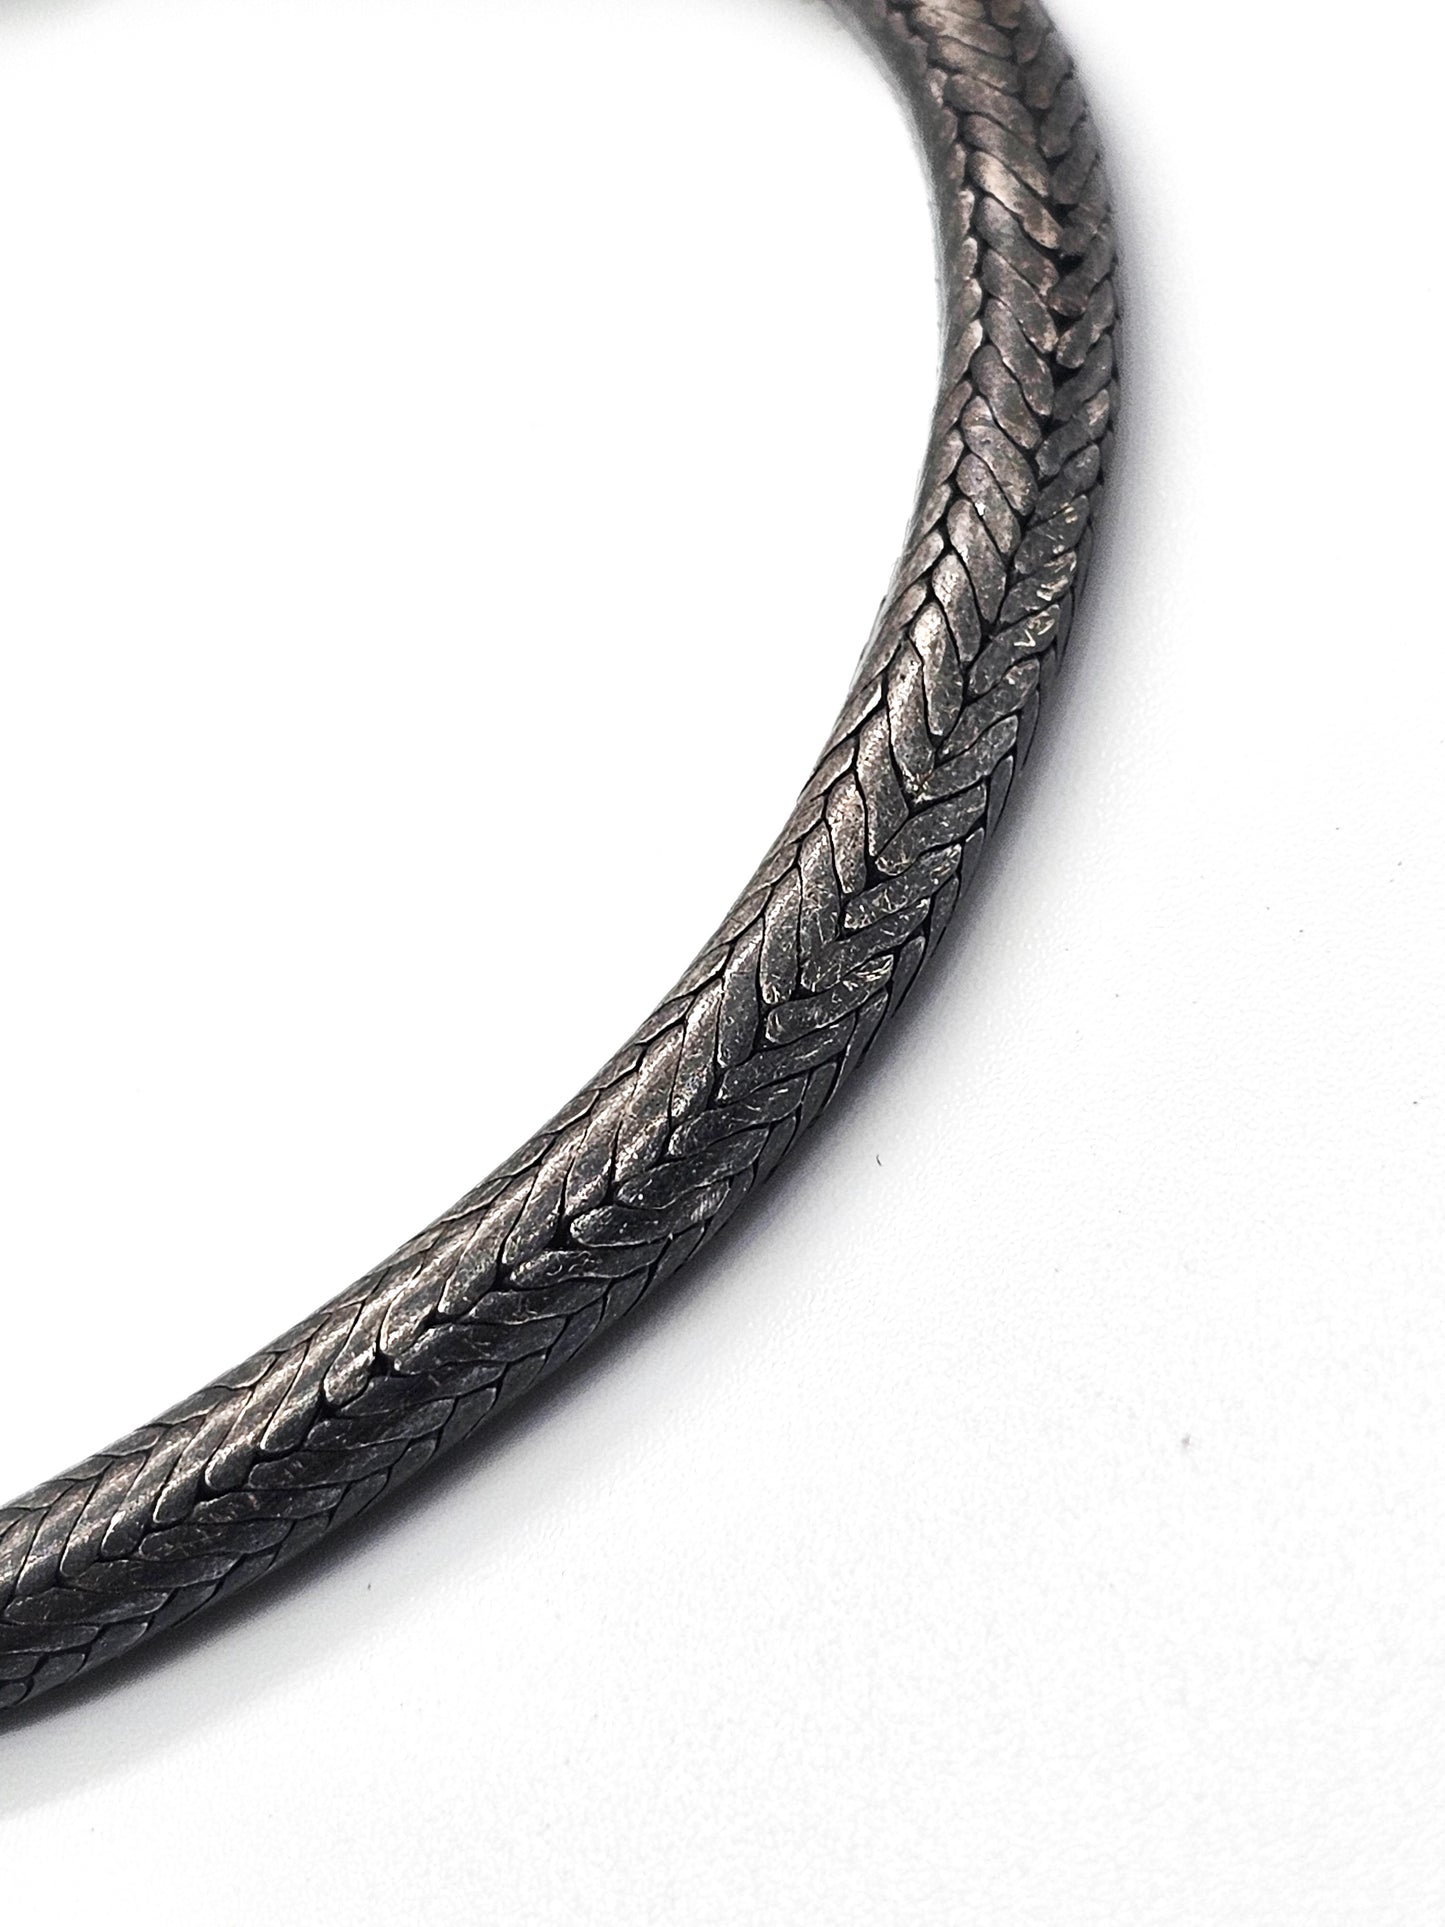 Viking style Tribal knitted woven braid vintage sterling silver bracelet